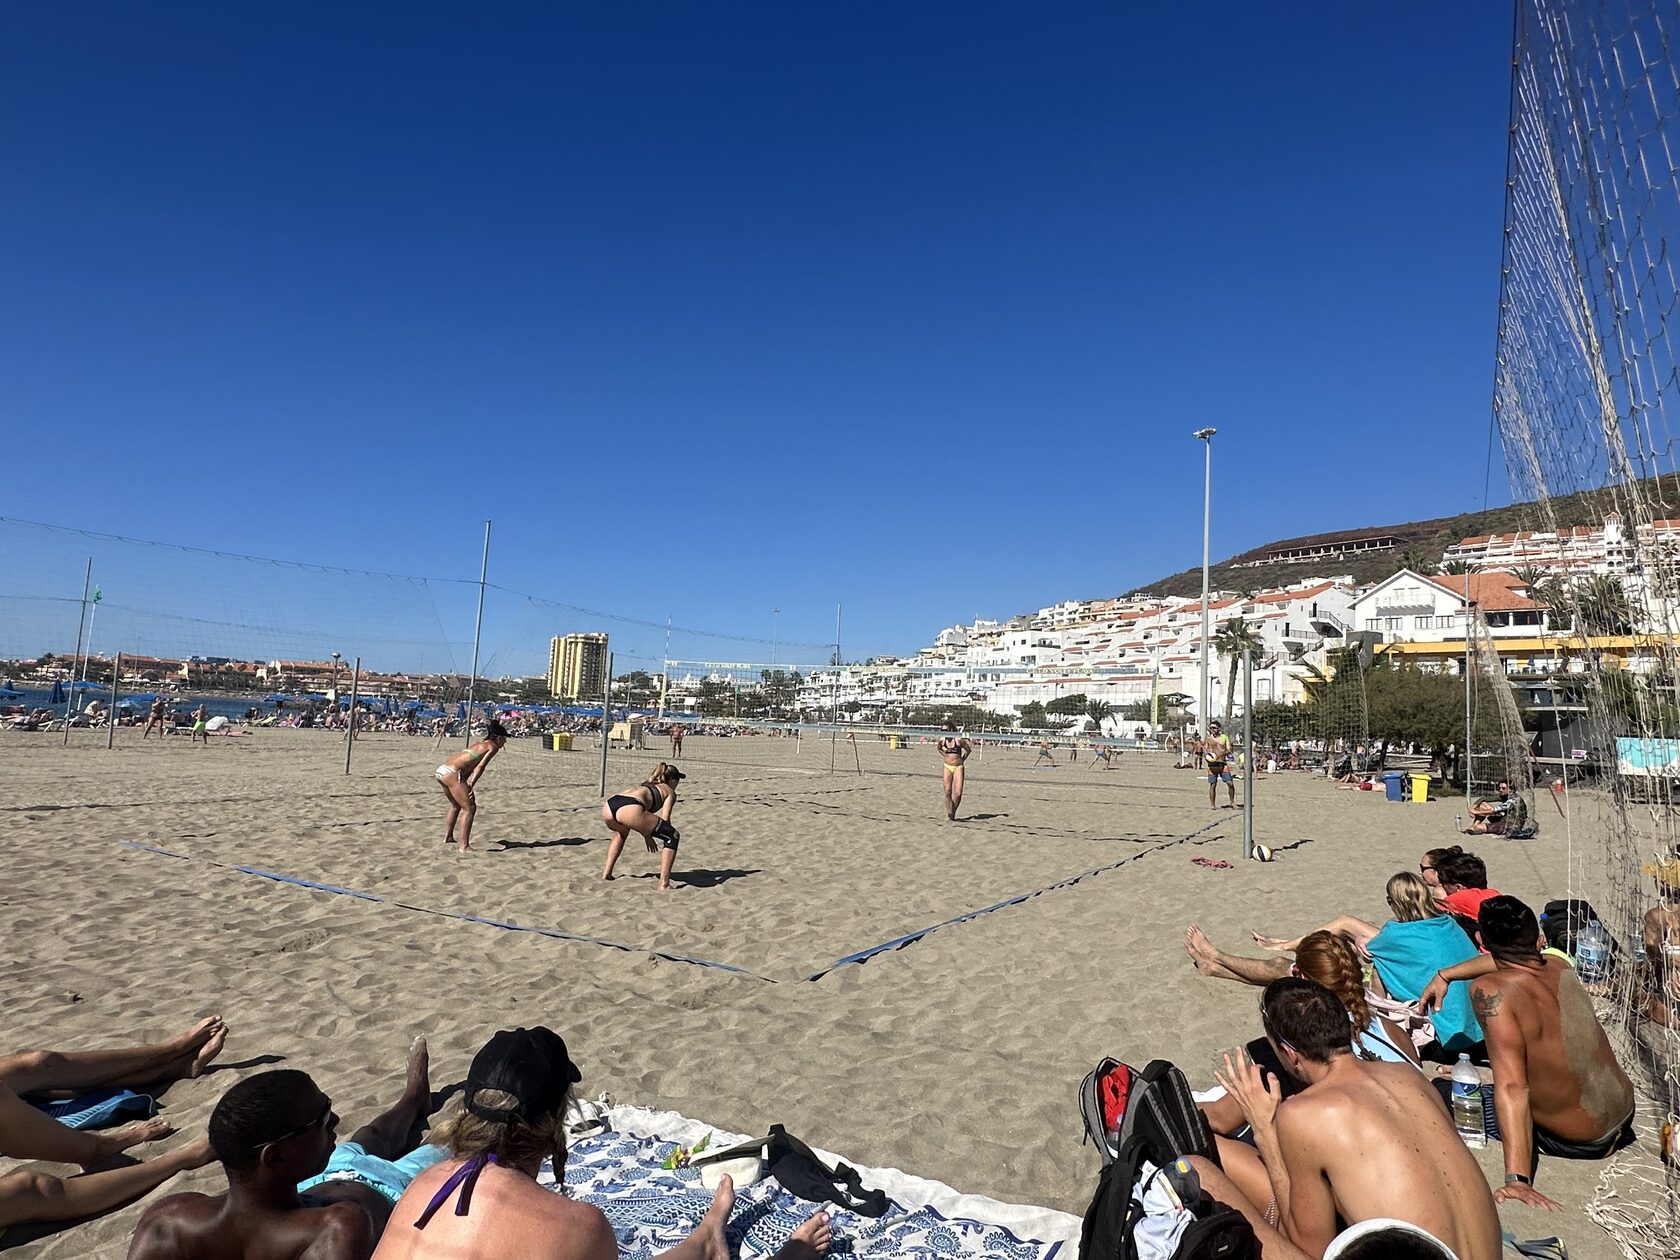 Beach Volleyball camp in Mallorca photo